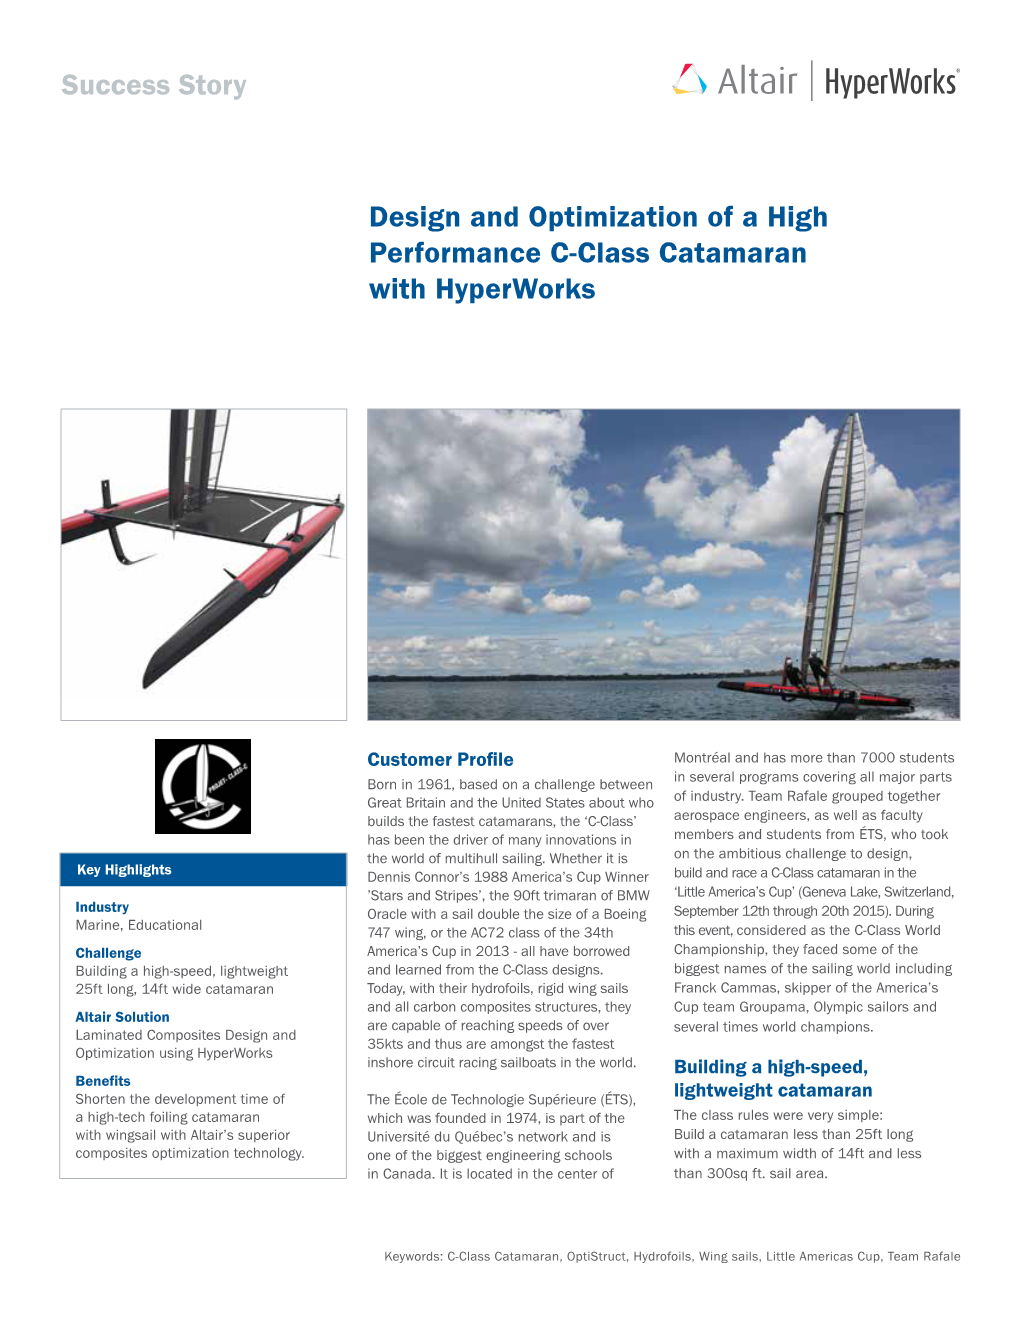 Design and Optimization of a High Performance C-Class Catamaran with Hyperworks Success Story